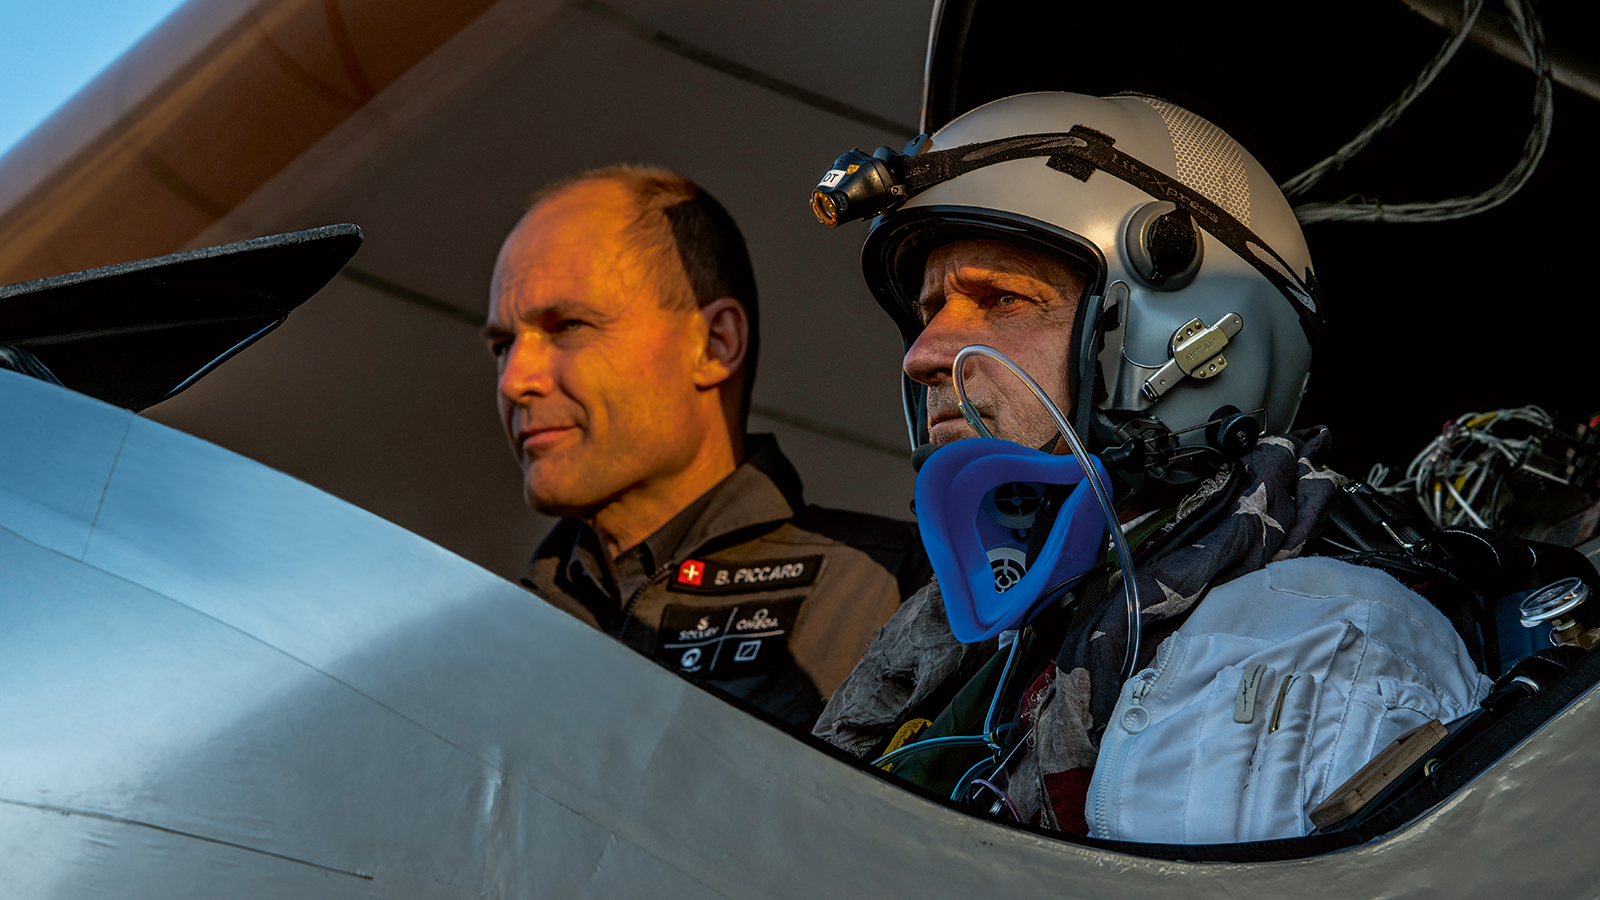 Solar Impulse Pilots